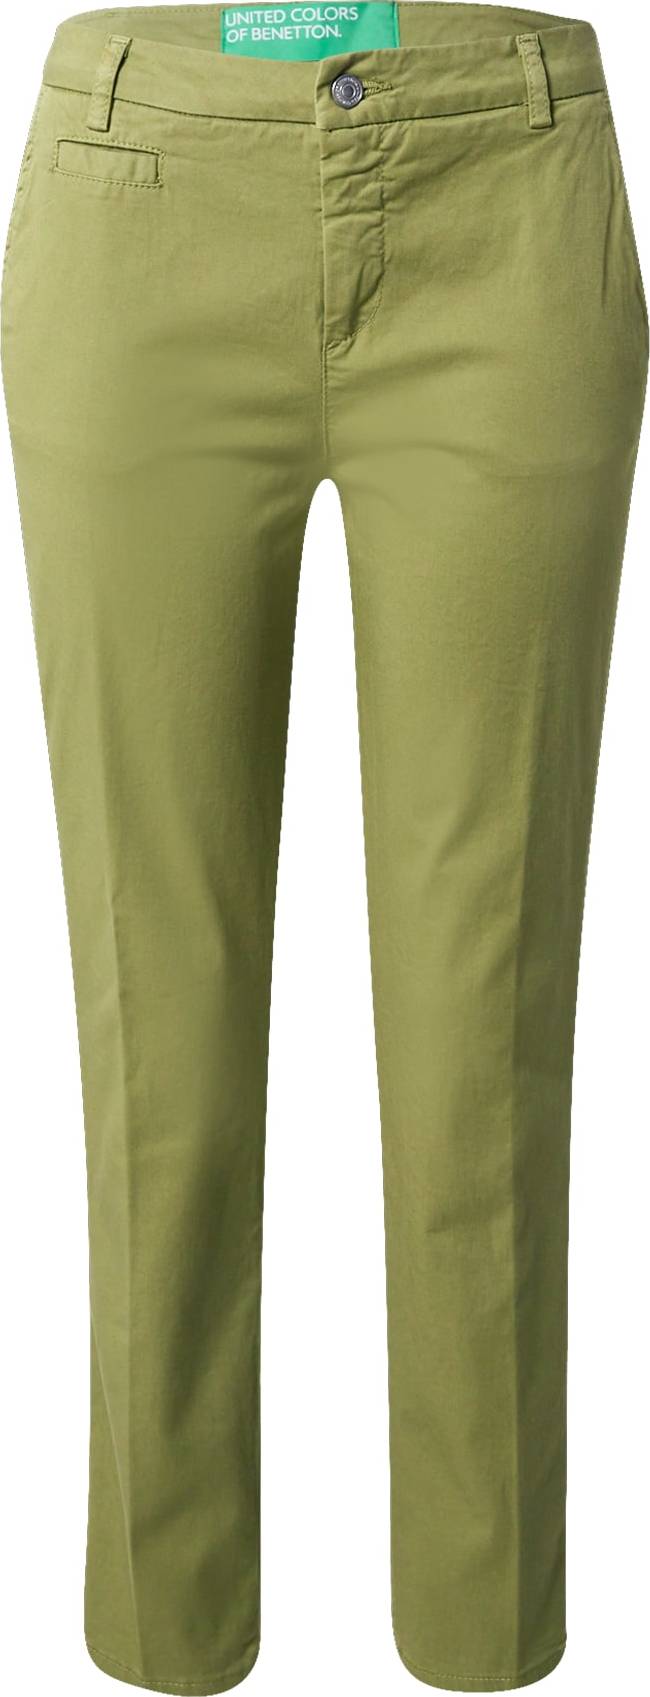 UNITED COLORS OF BENETTON Chino kalhoty olivová